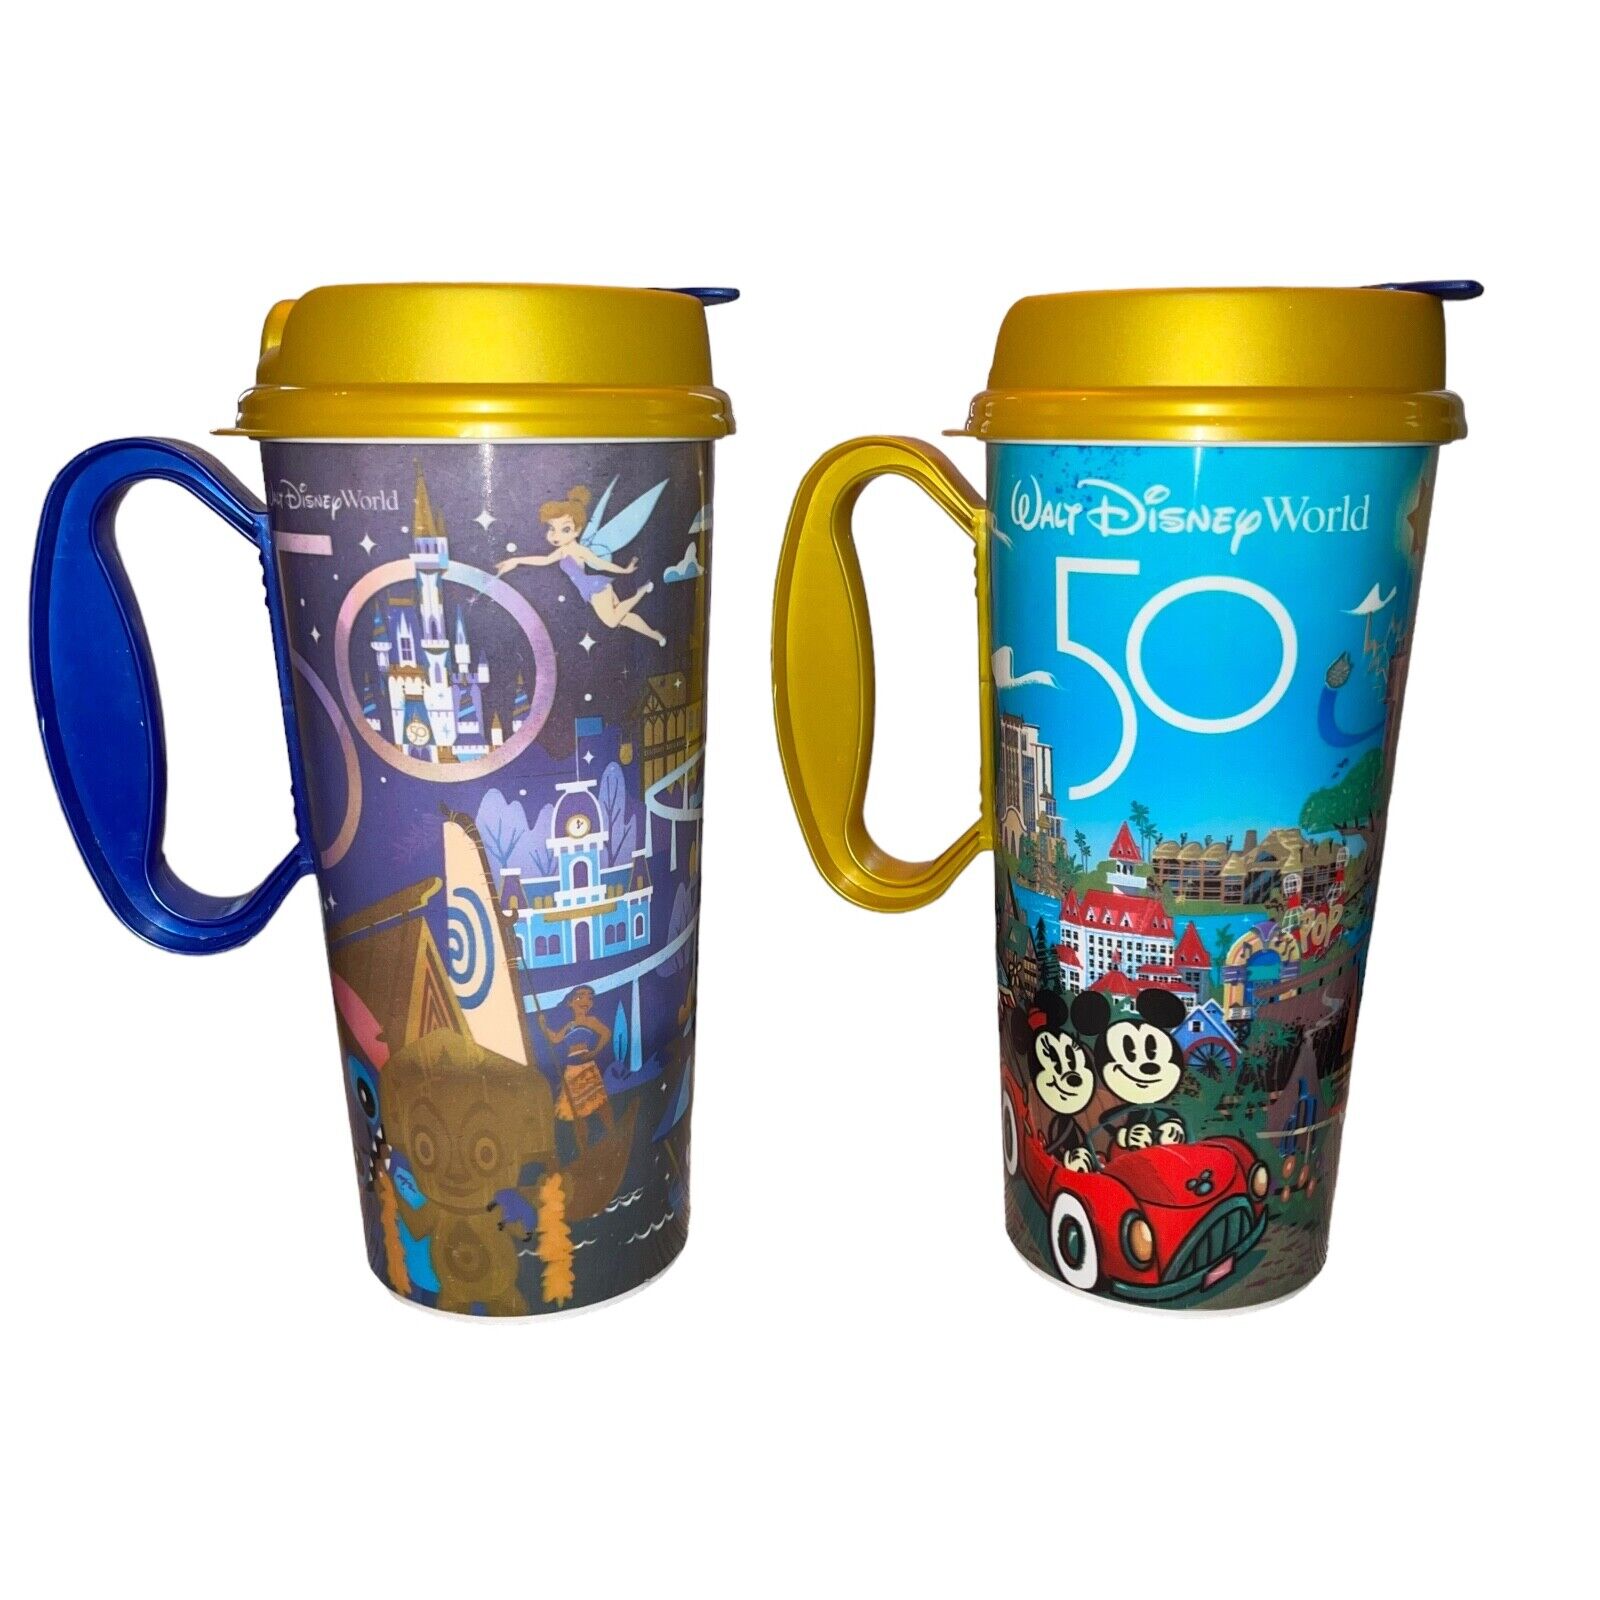 Vintage Walt Disney Parks Refillable Mug Set - Disney World 50th Anniversary